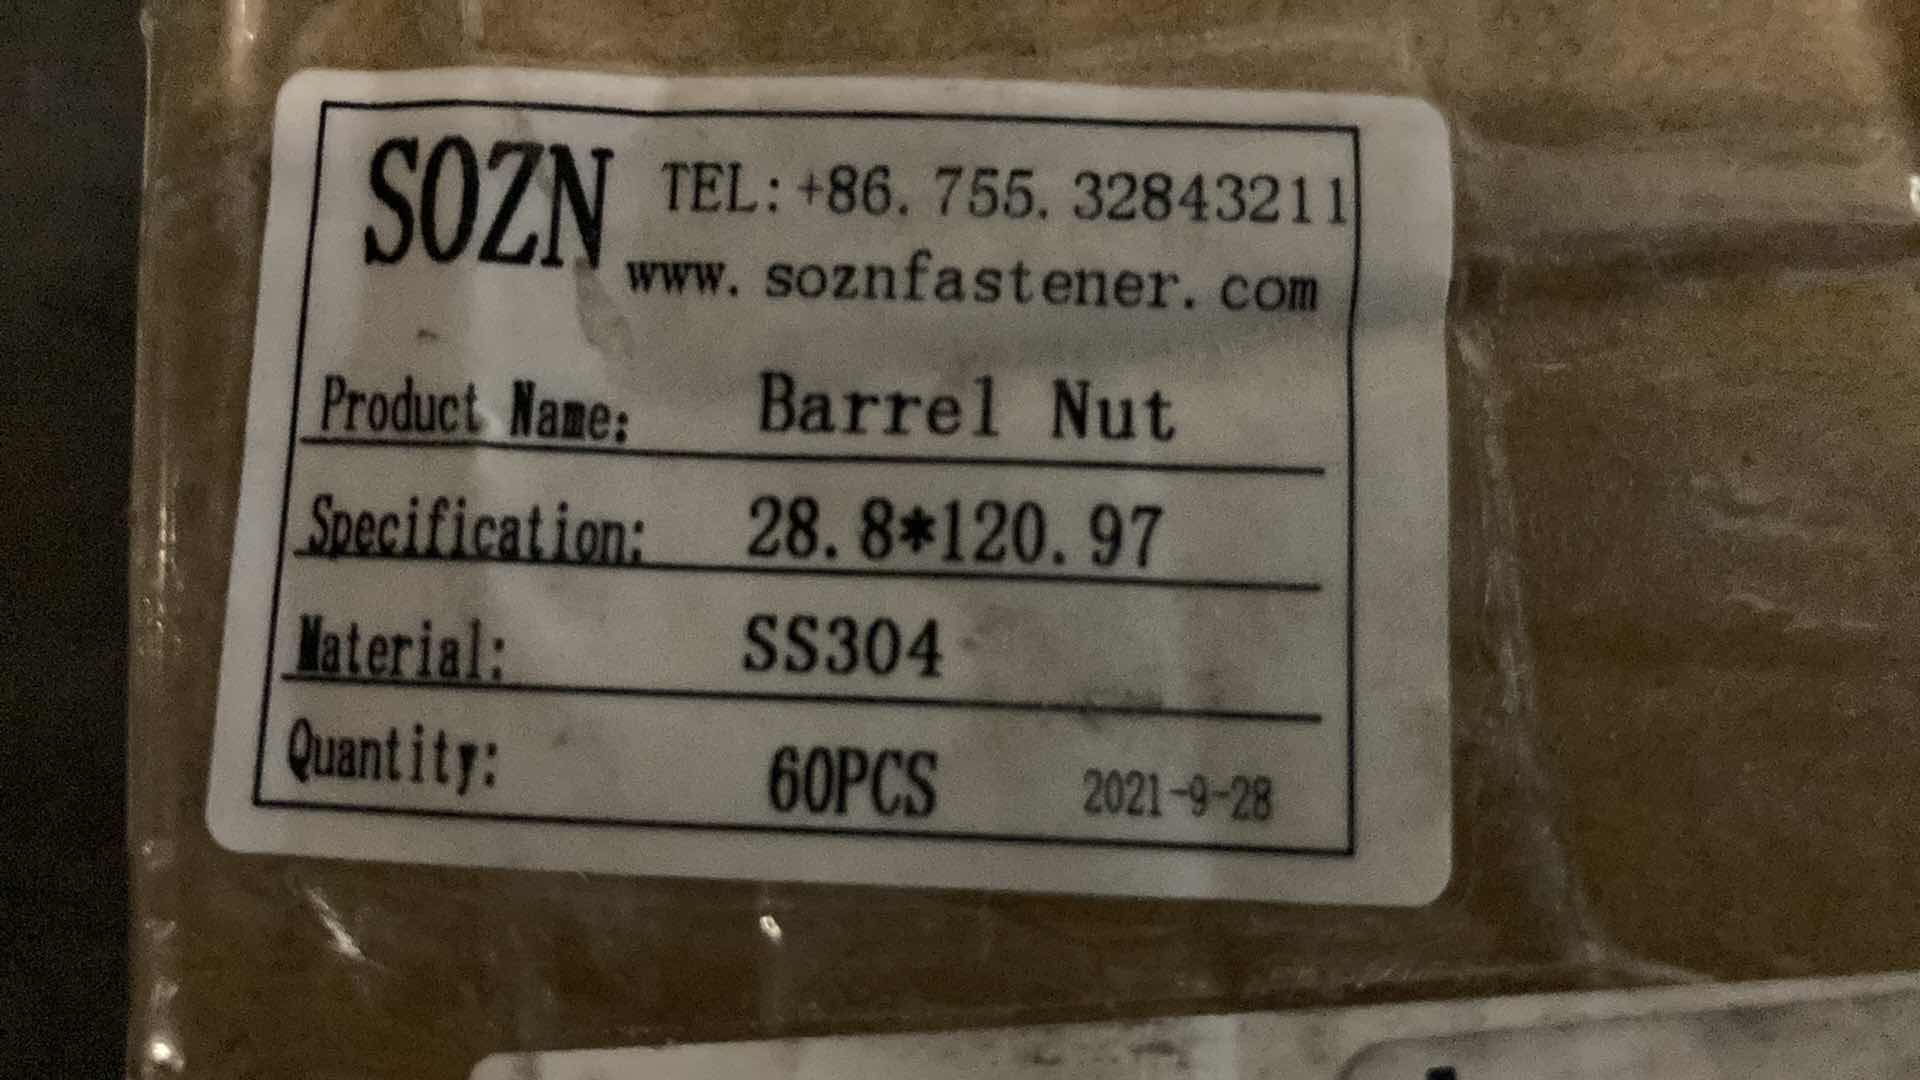 Photo 5 of NEW SOZN FASTENER STAINLESS STEEL BARREL NUTS (60PCS) 28.8mm X 120.97mm